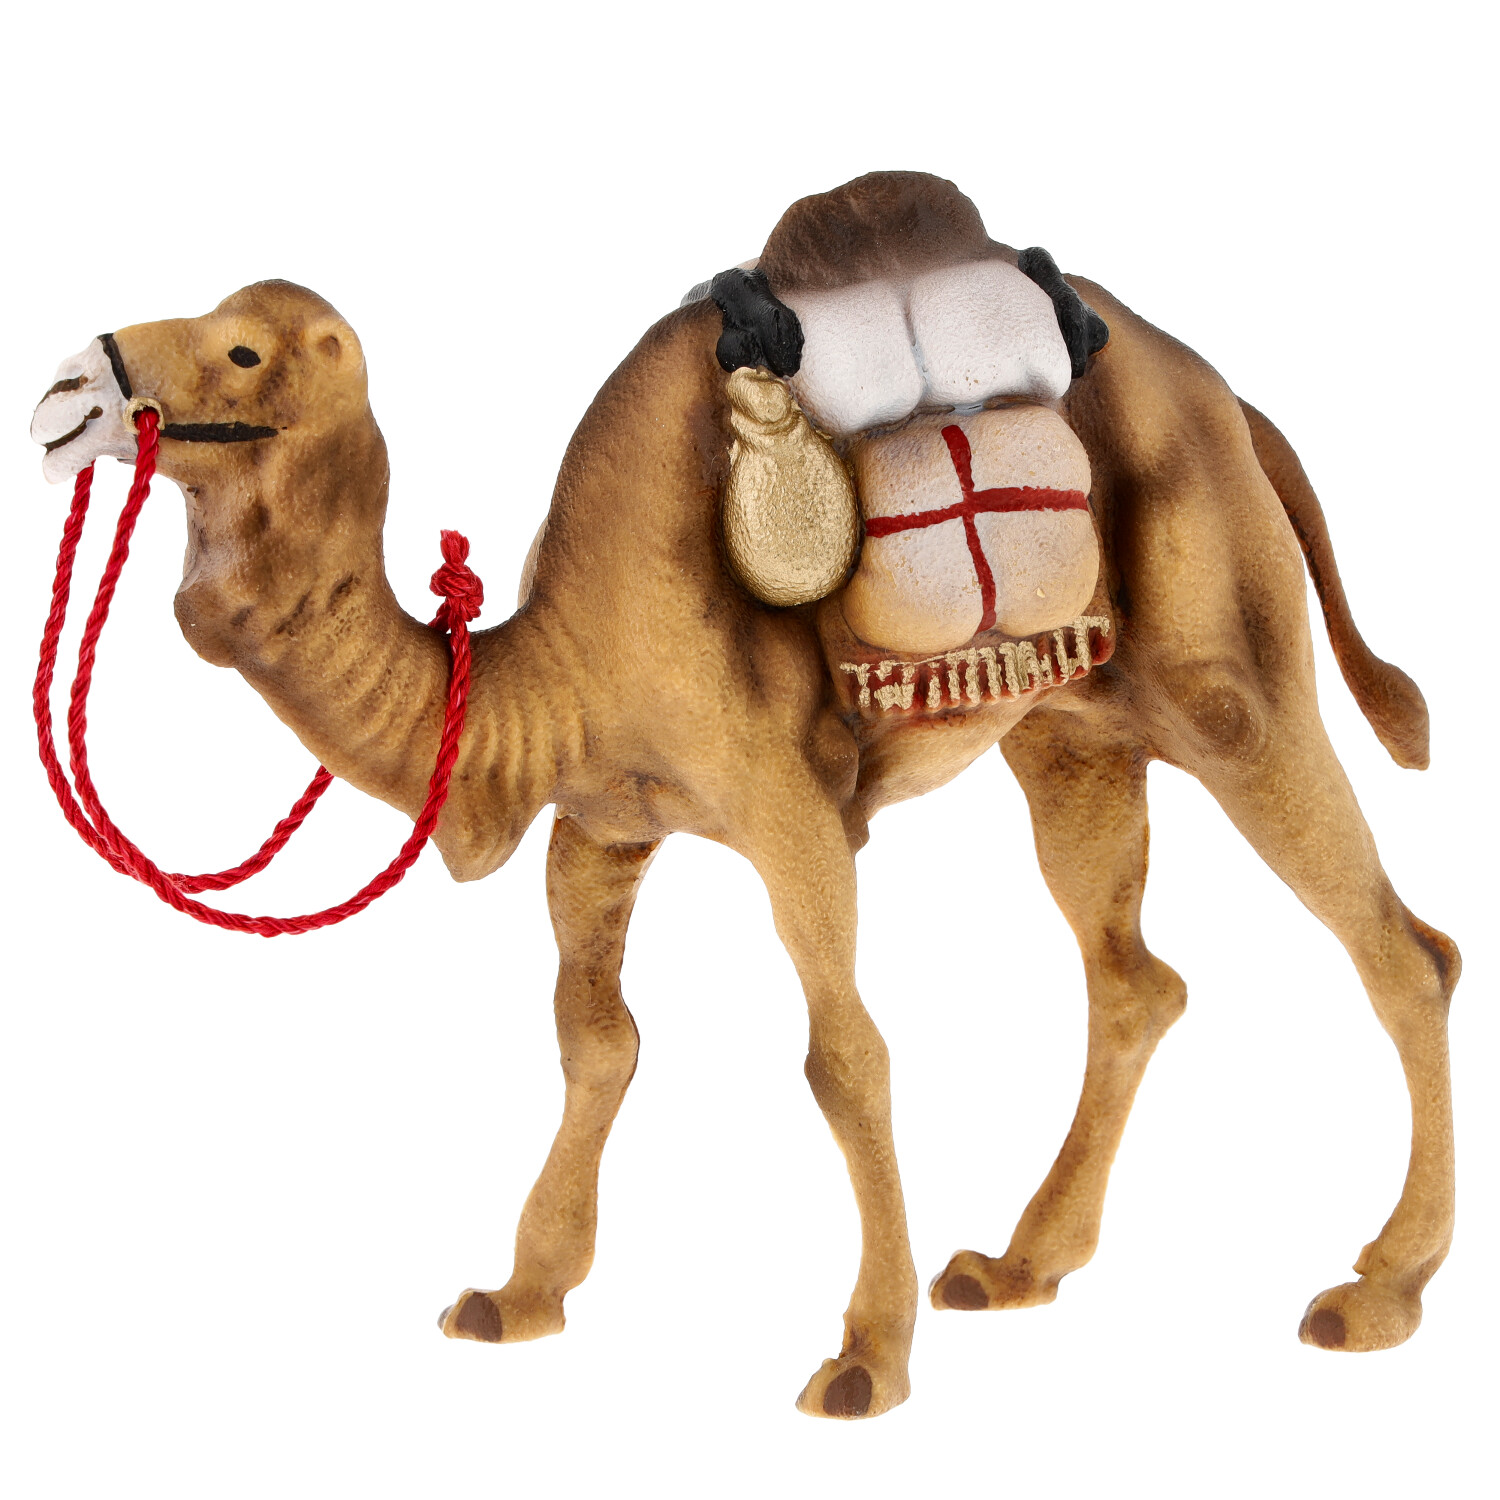 Bactrian camel - Marolin Plastik - Resin Nativity figure - made in Germany